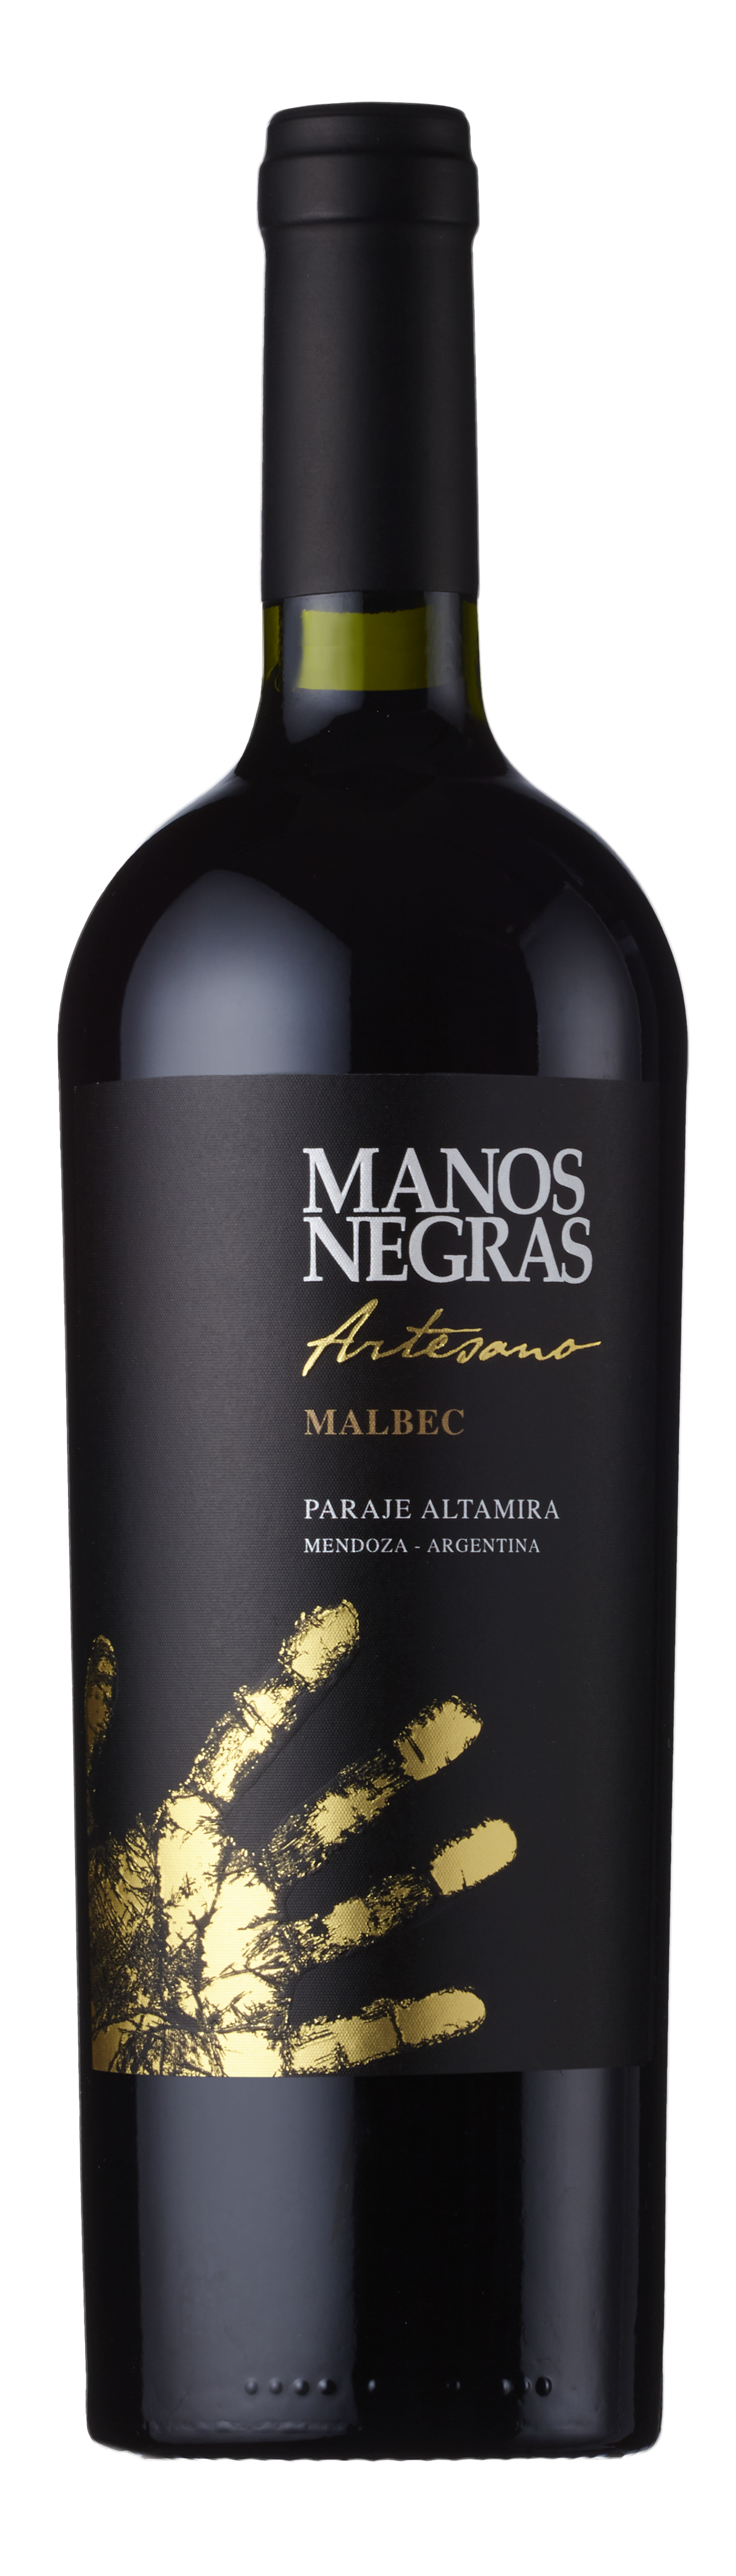 Bottle shot - Manos Negras, Artesano Malbec, Paraje Altamira, Mendoza, Argentina